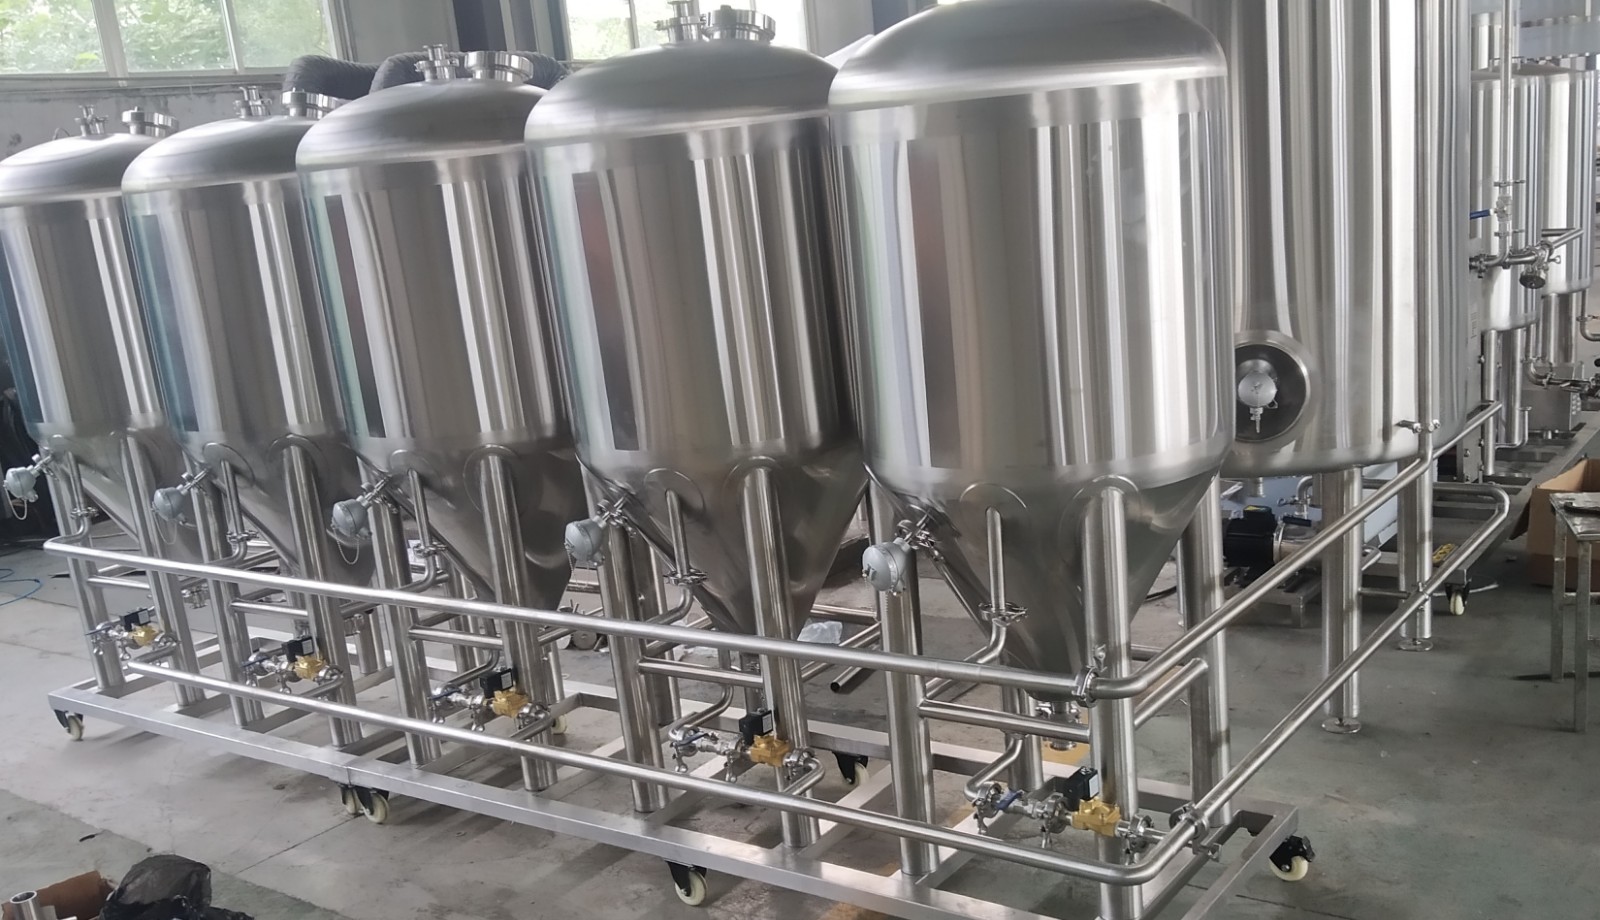 100 beer brewing fermentation tanks.jpg